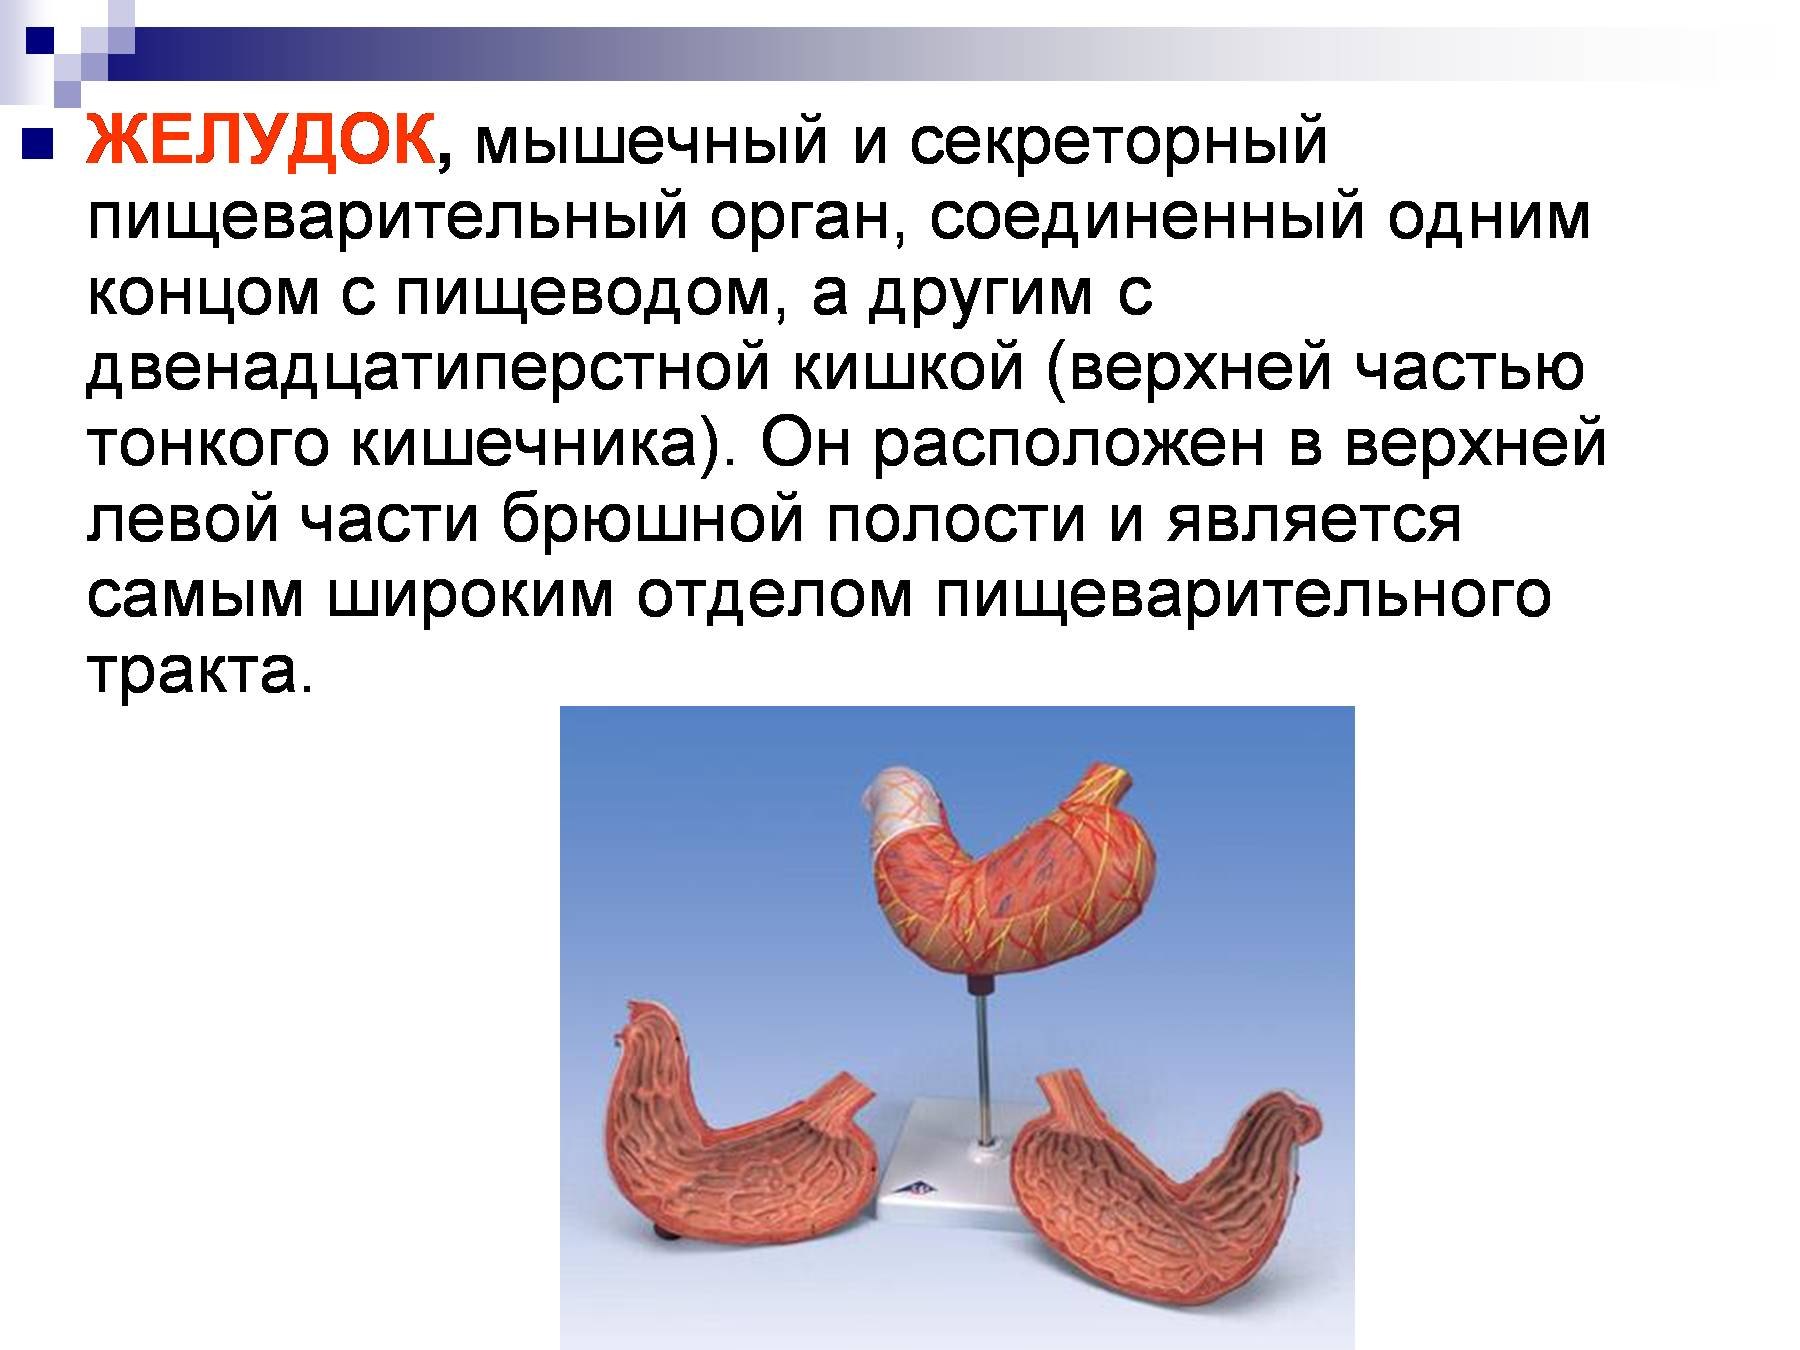 Мускульный желудок у птиц. Желудок курицы строение.